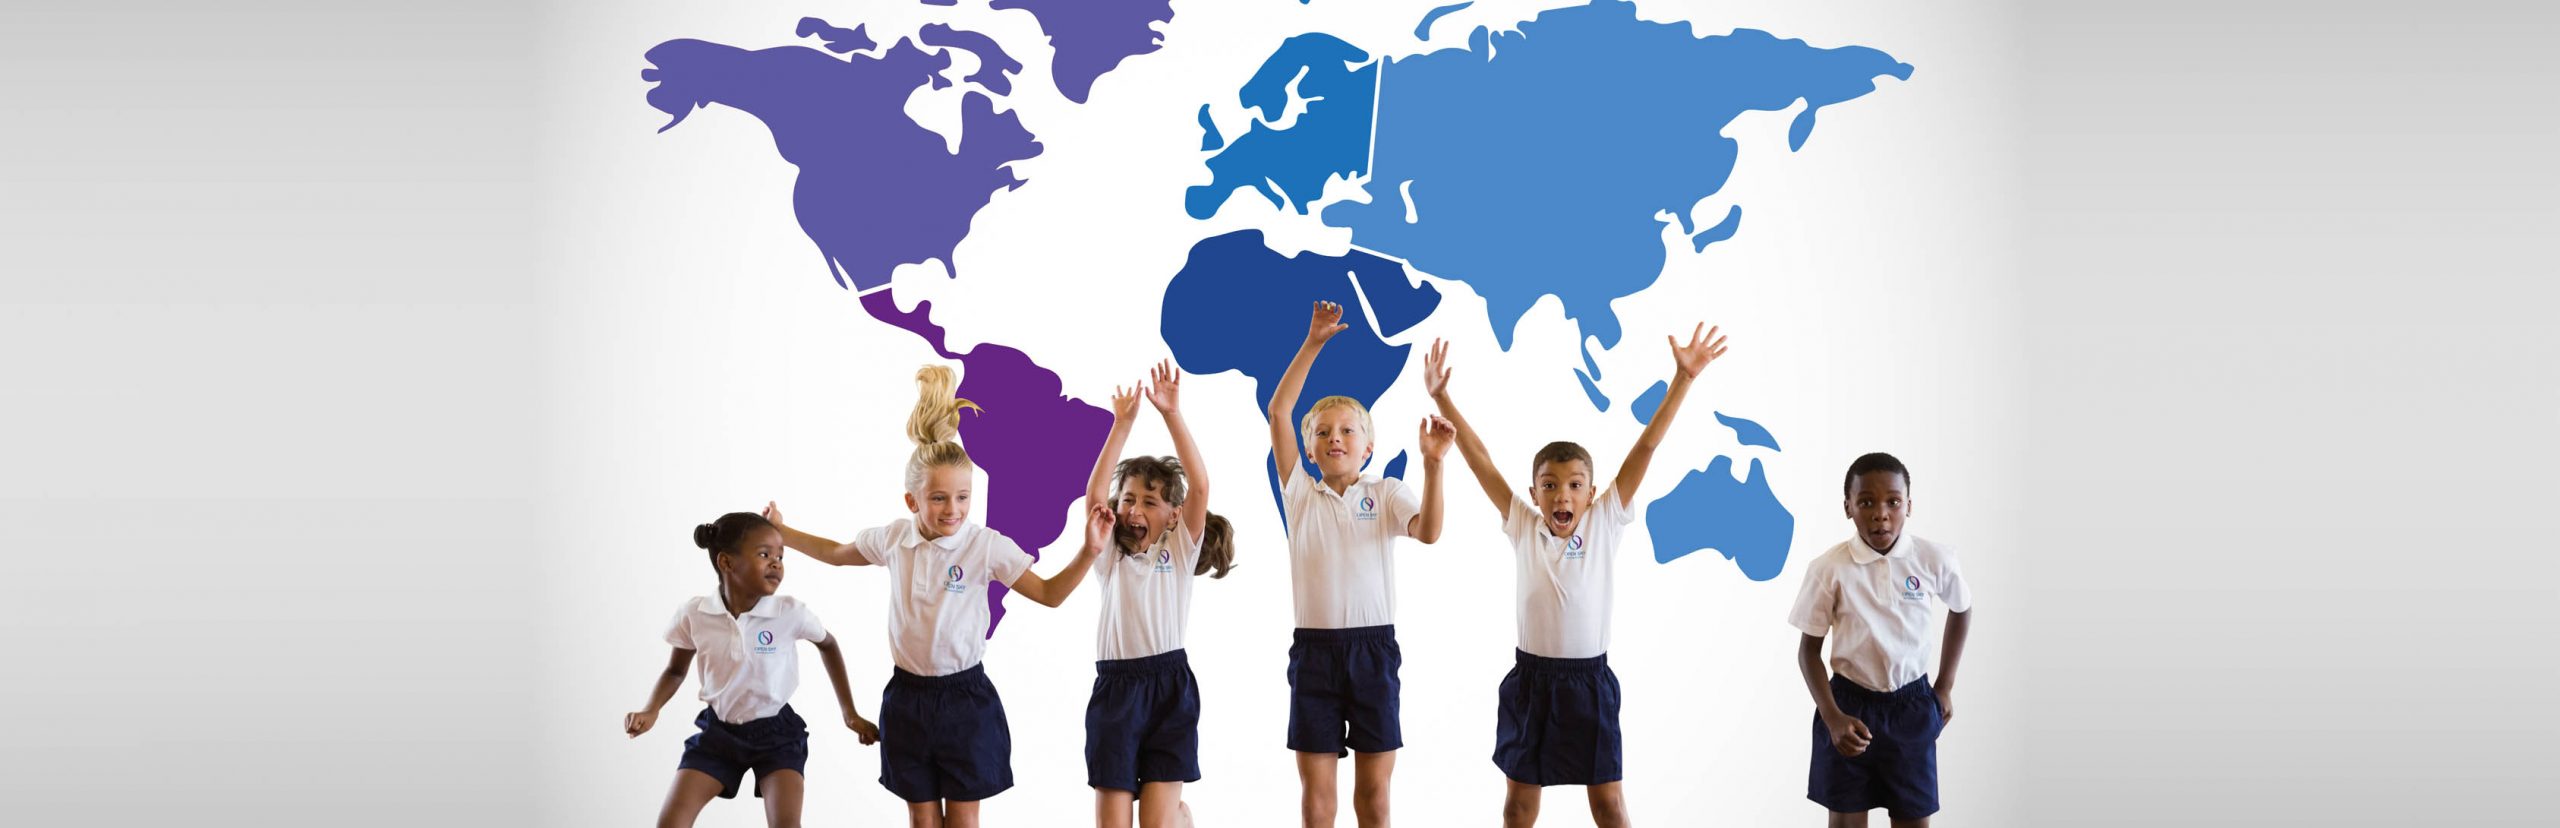 french english bilingual school open sky international